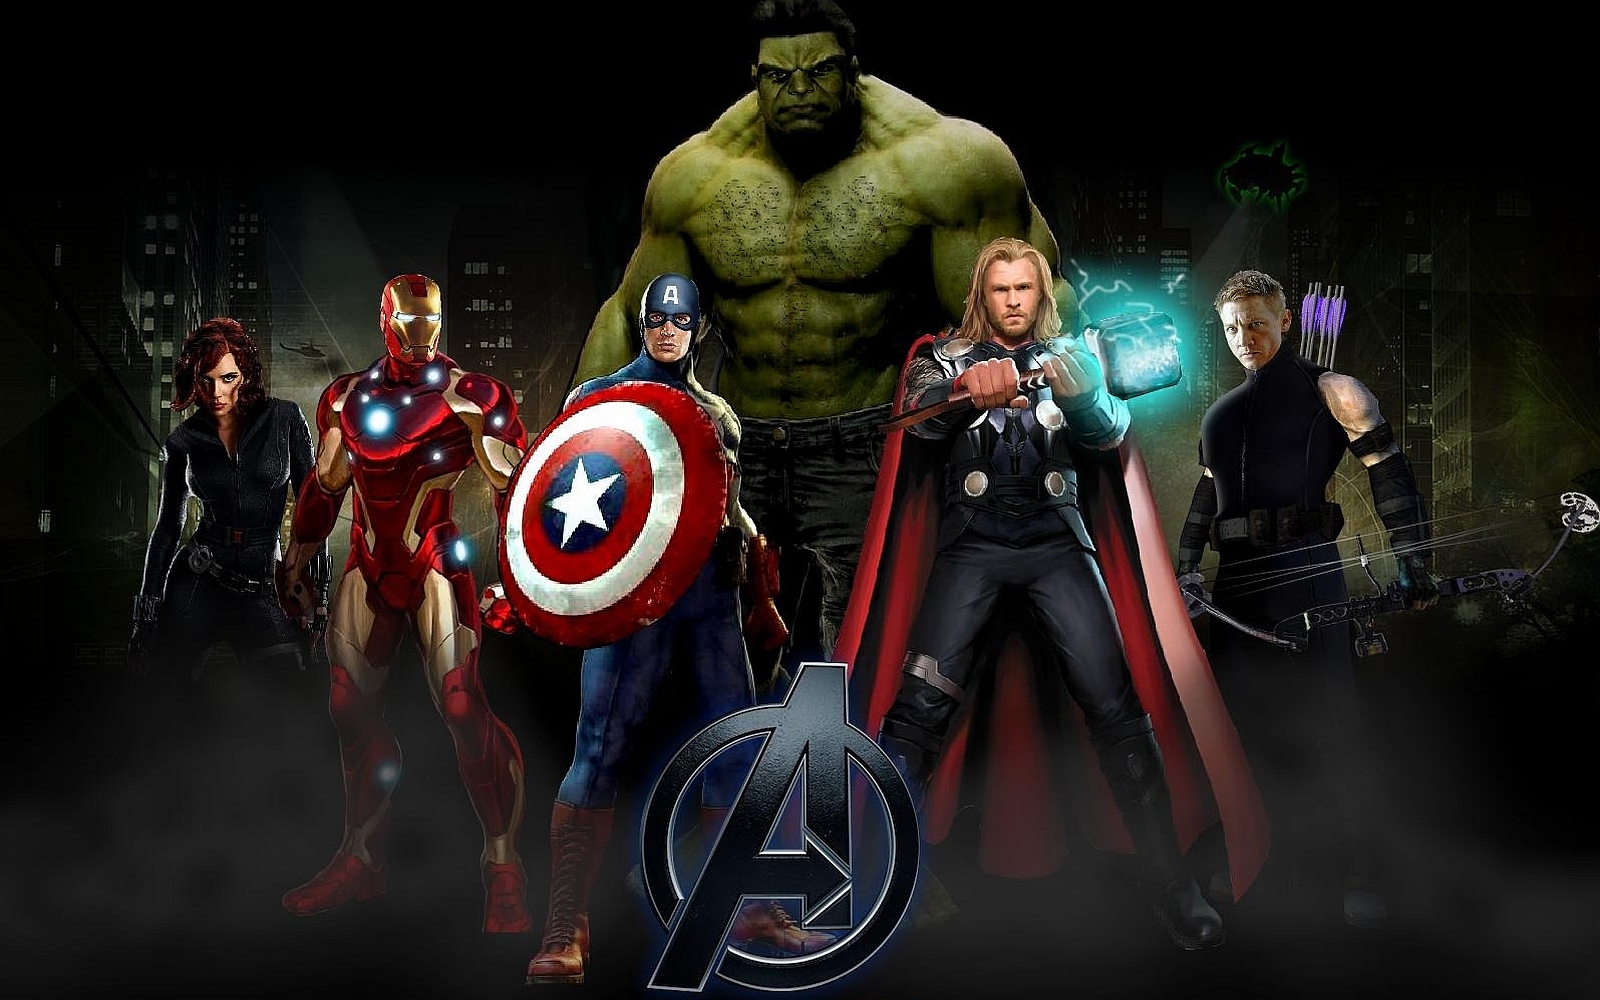 The Avengers Puter Wallpaper Desktop Background Id